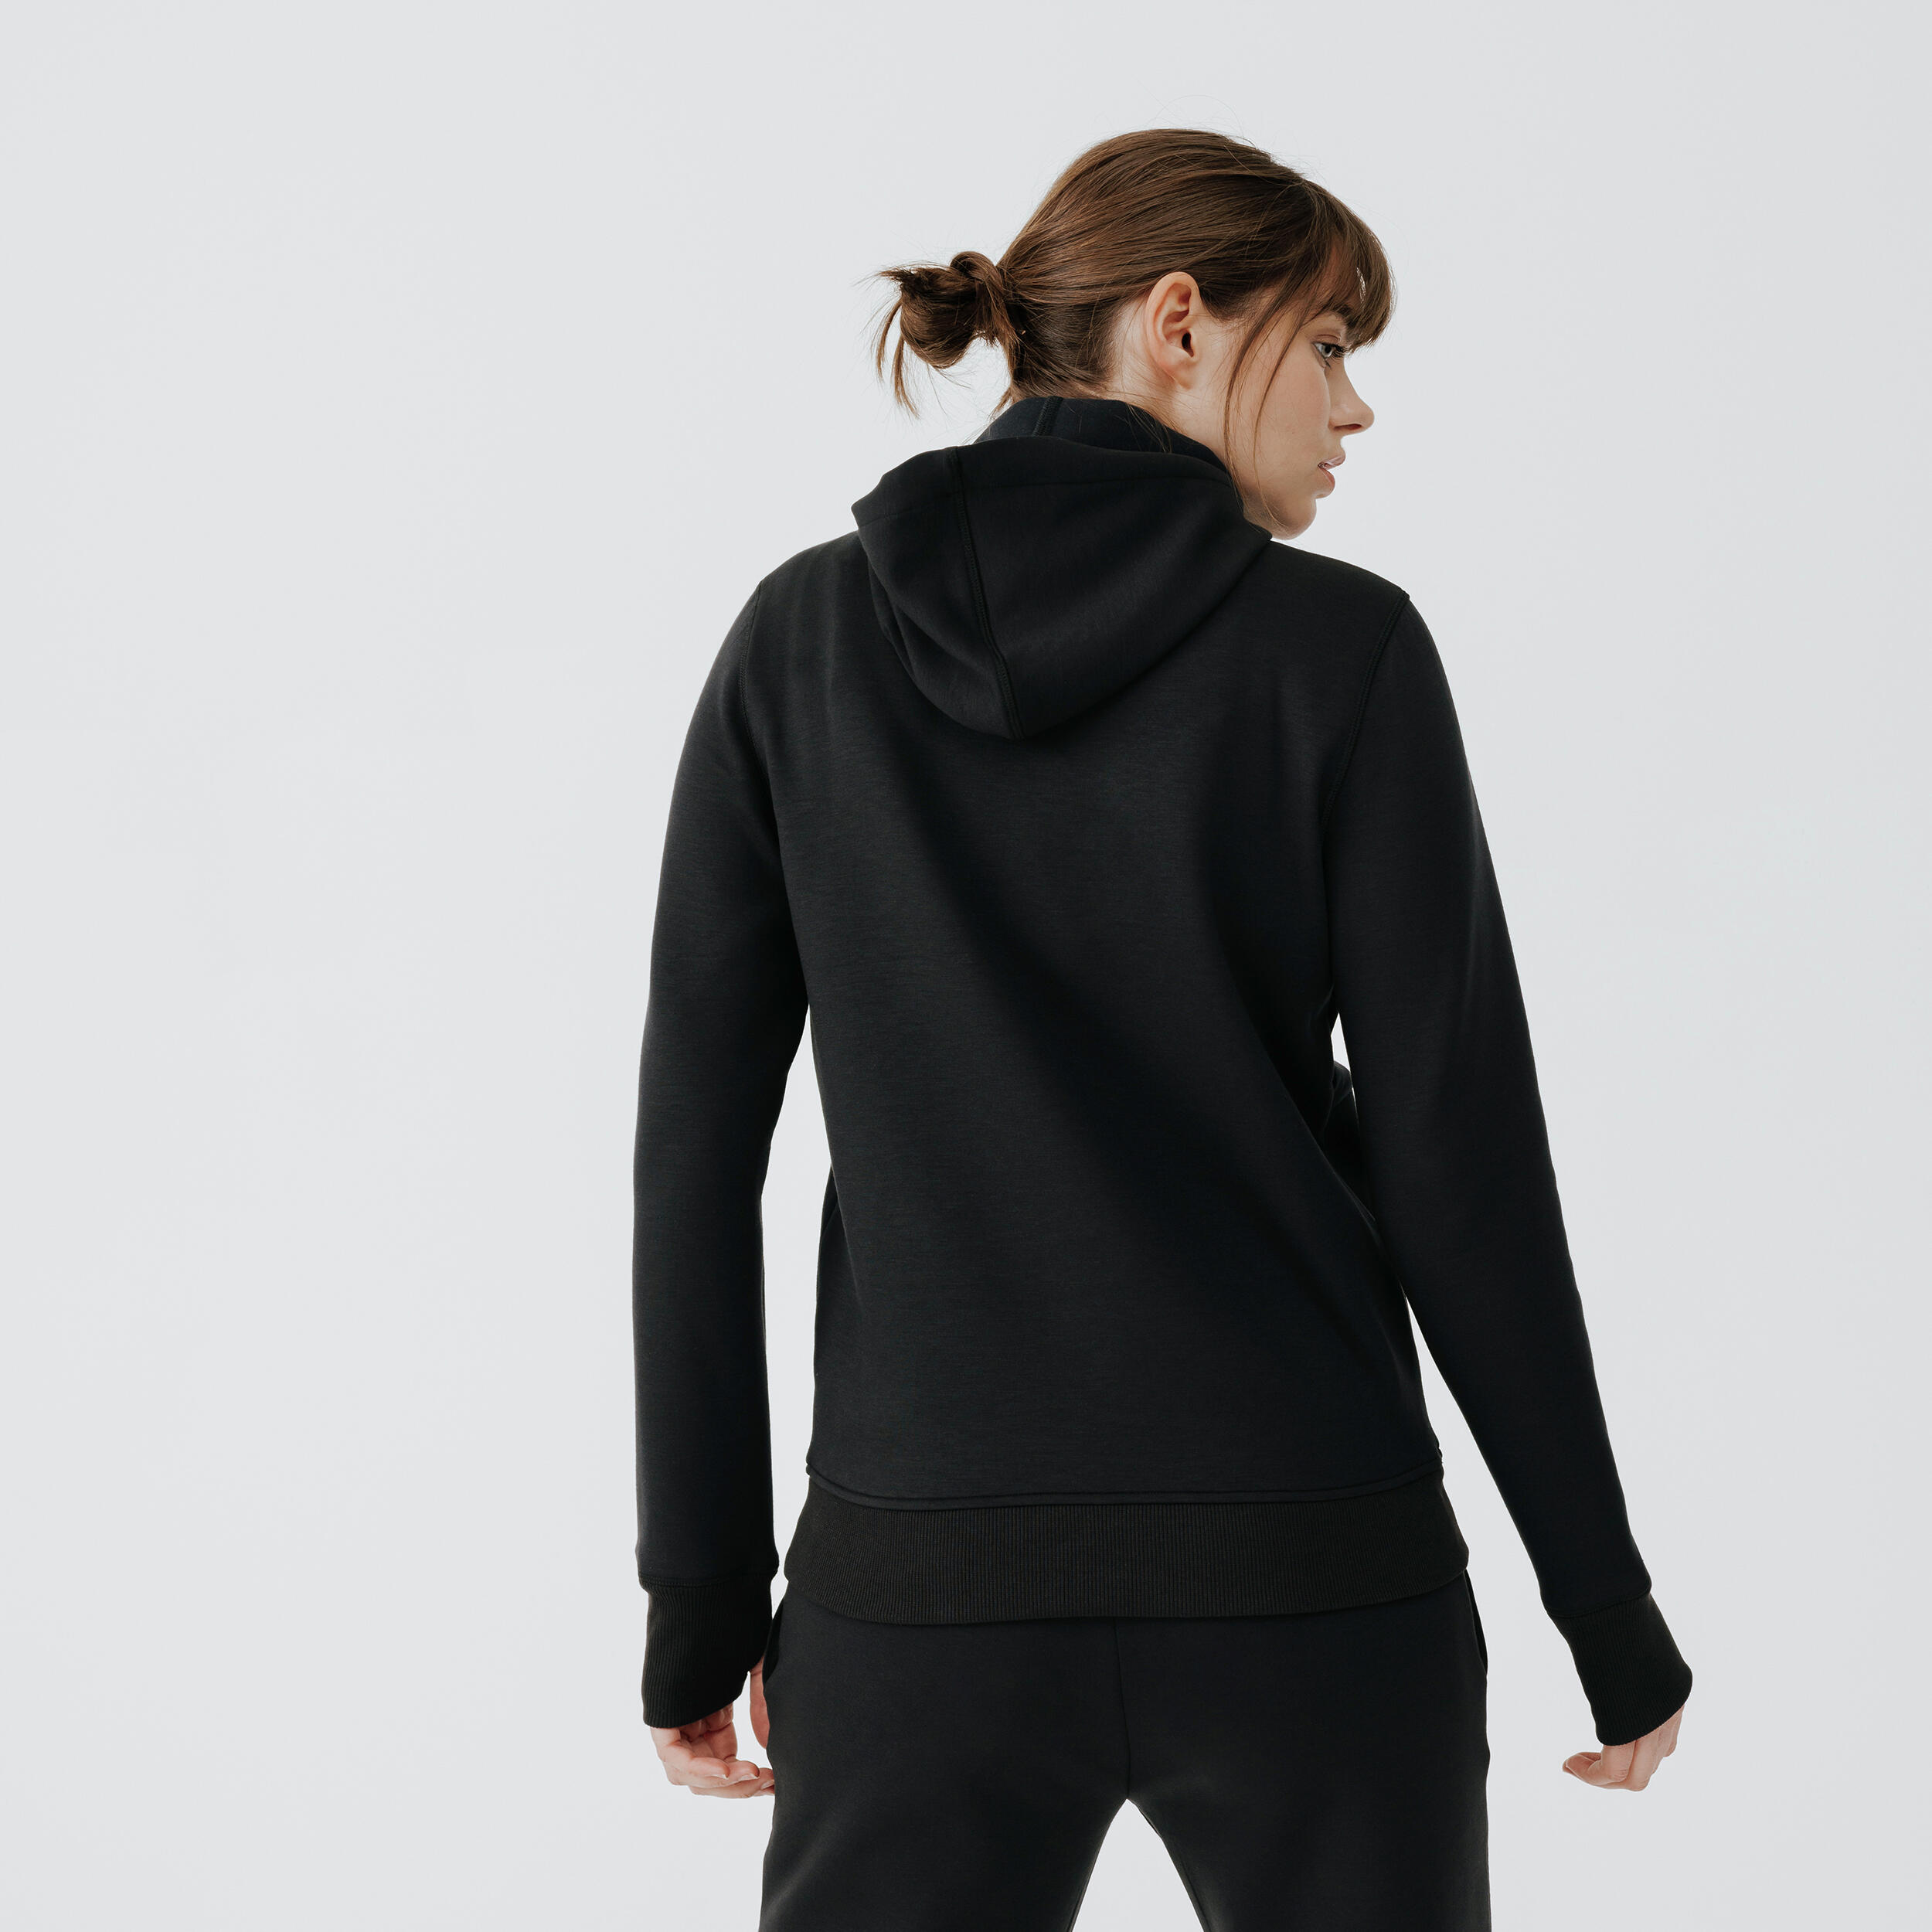 500 women's warm running/jogging hoodie - black 2/9